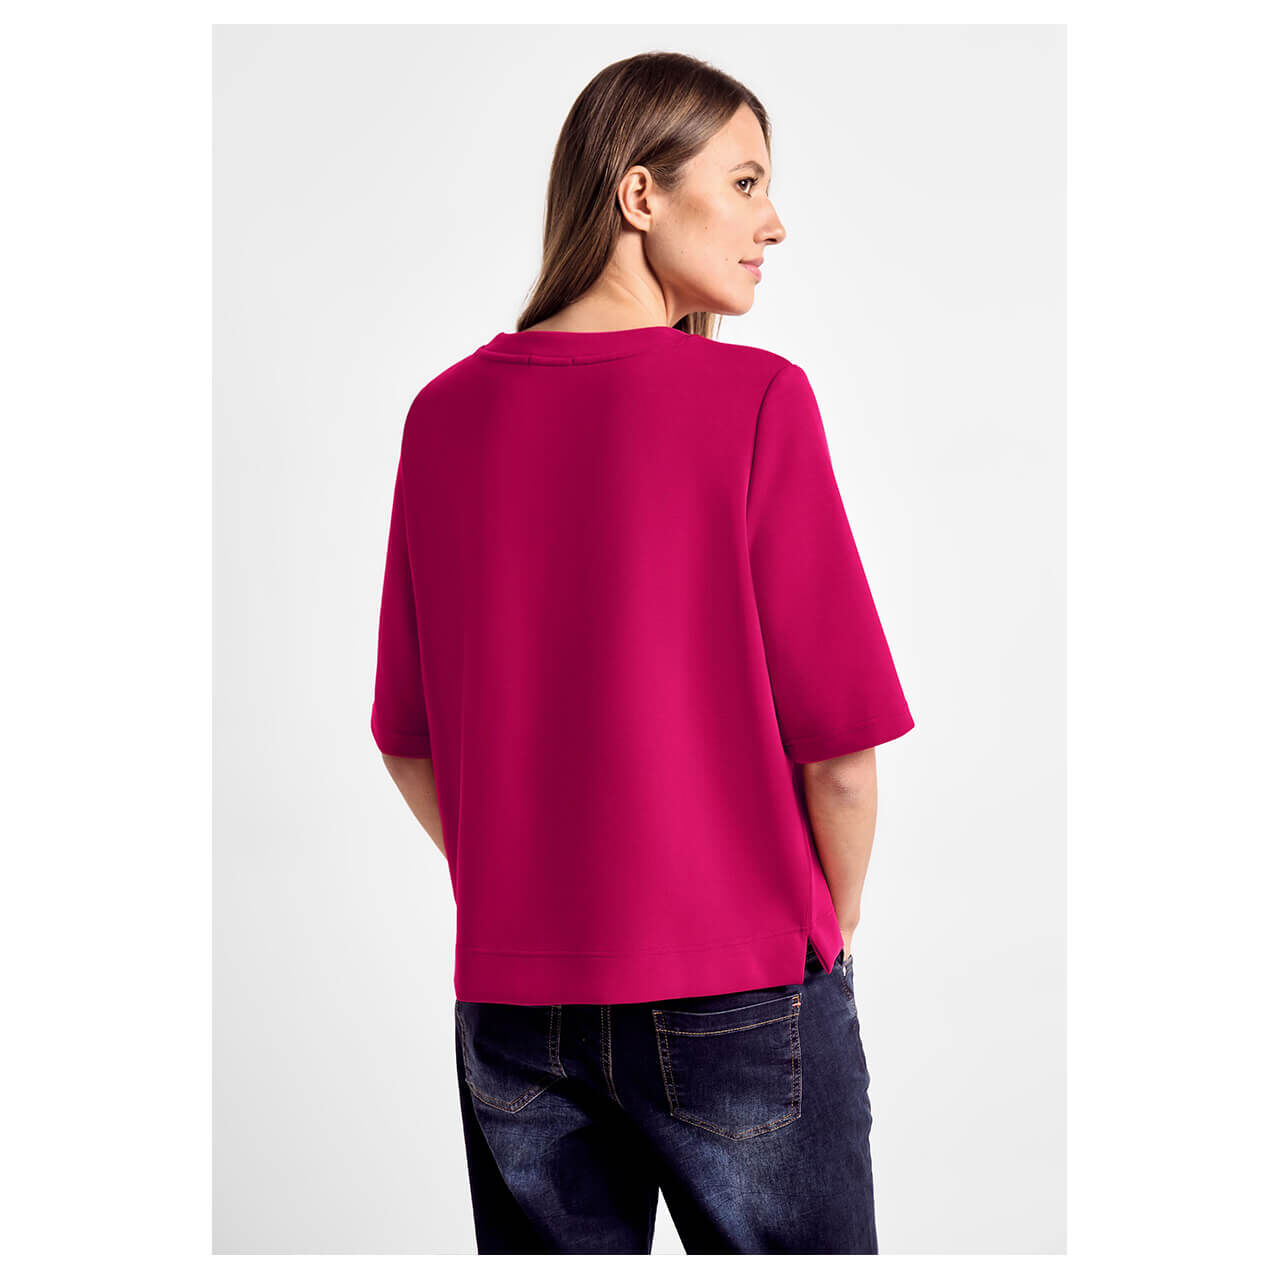 Cecil Damen Kurzarm Sweatshirt pink sorbet